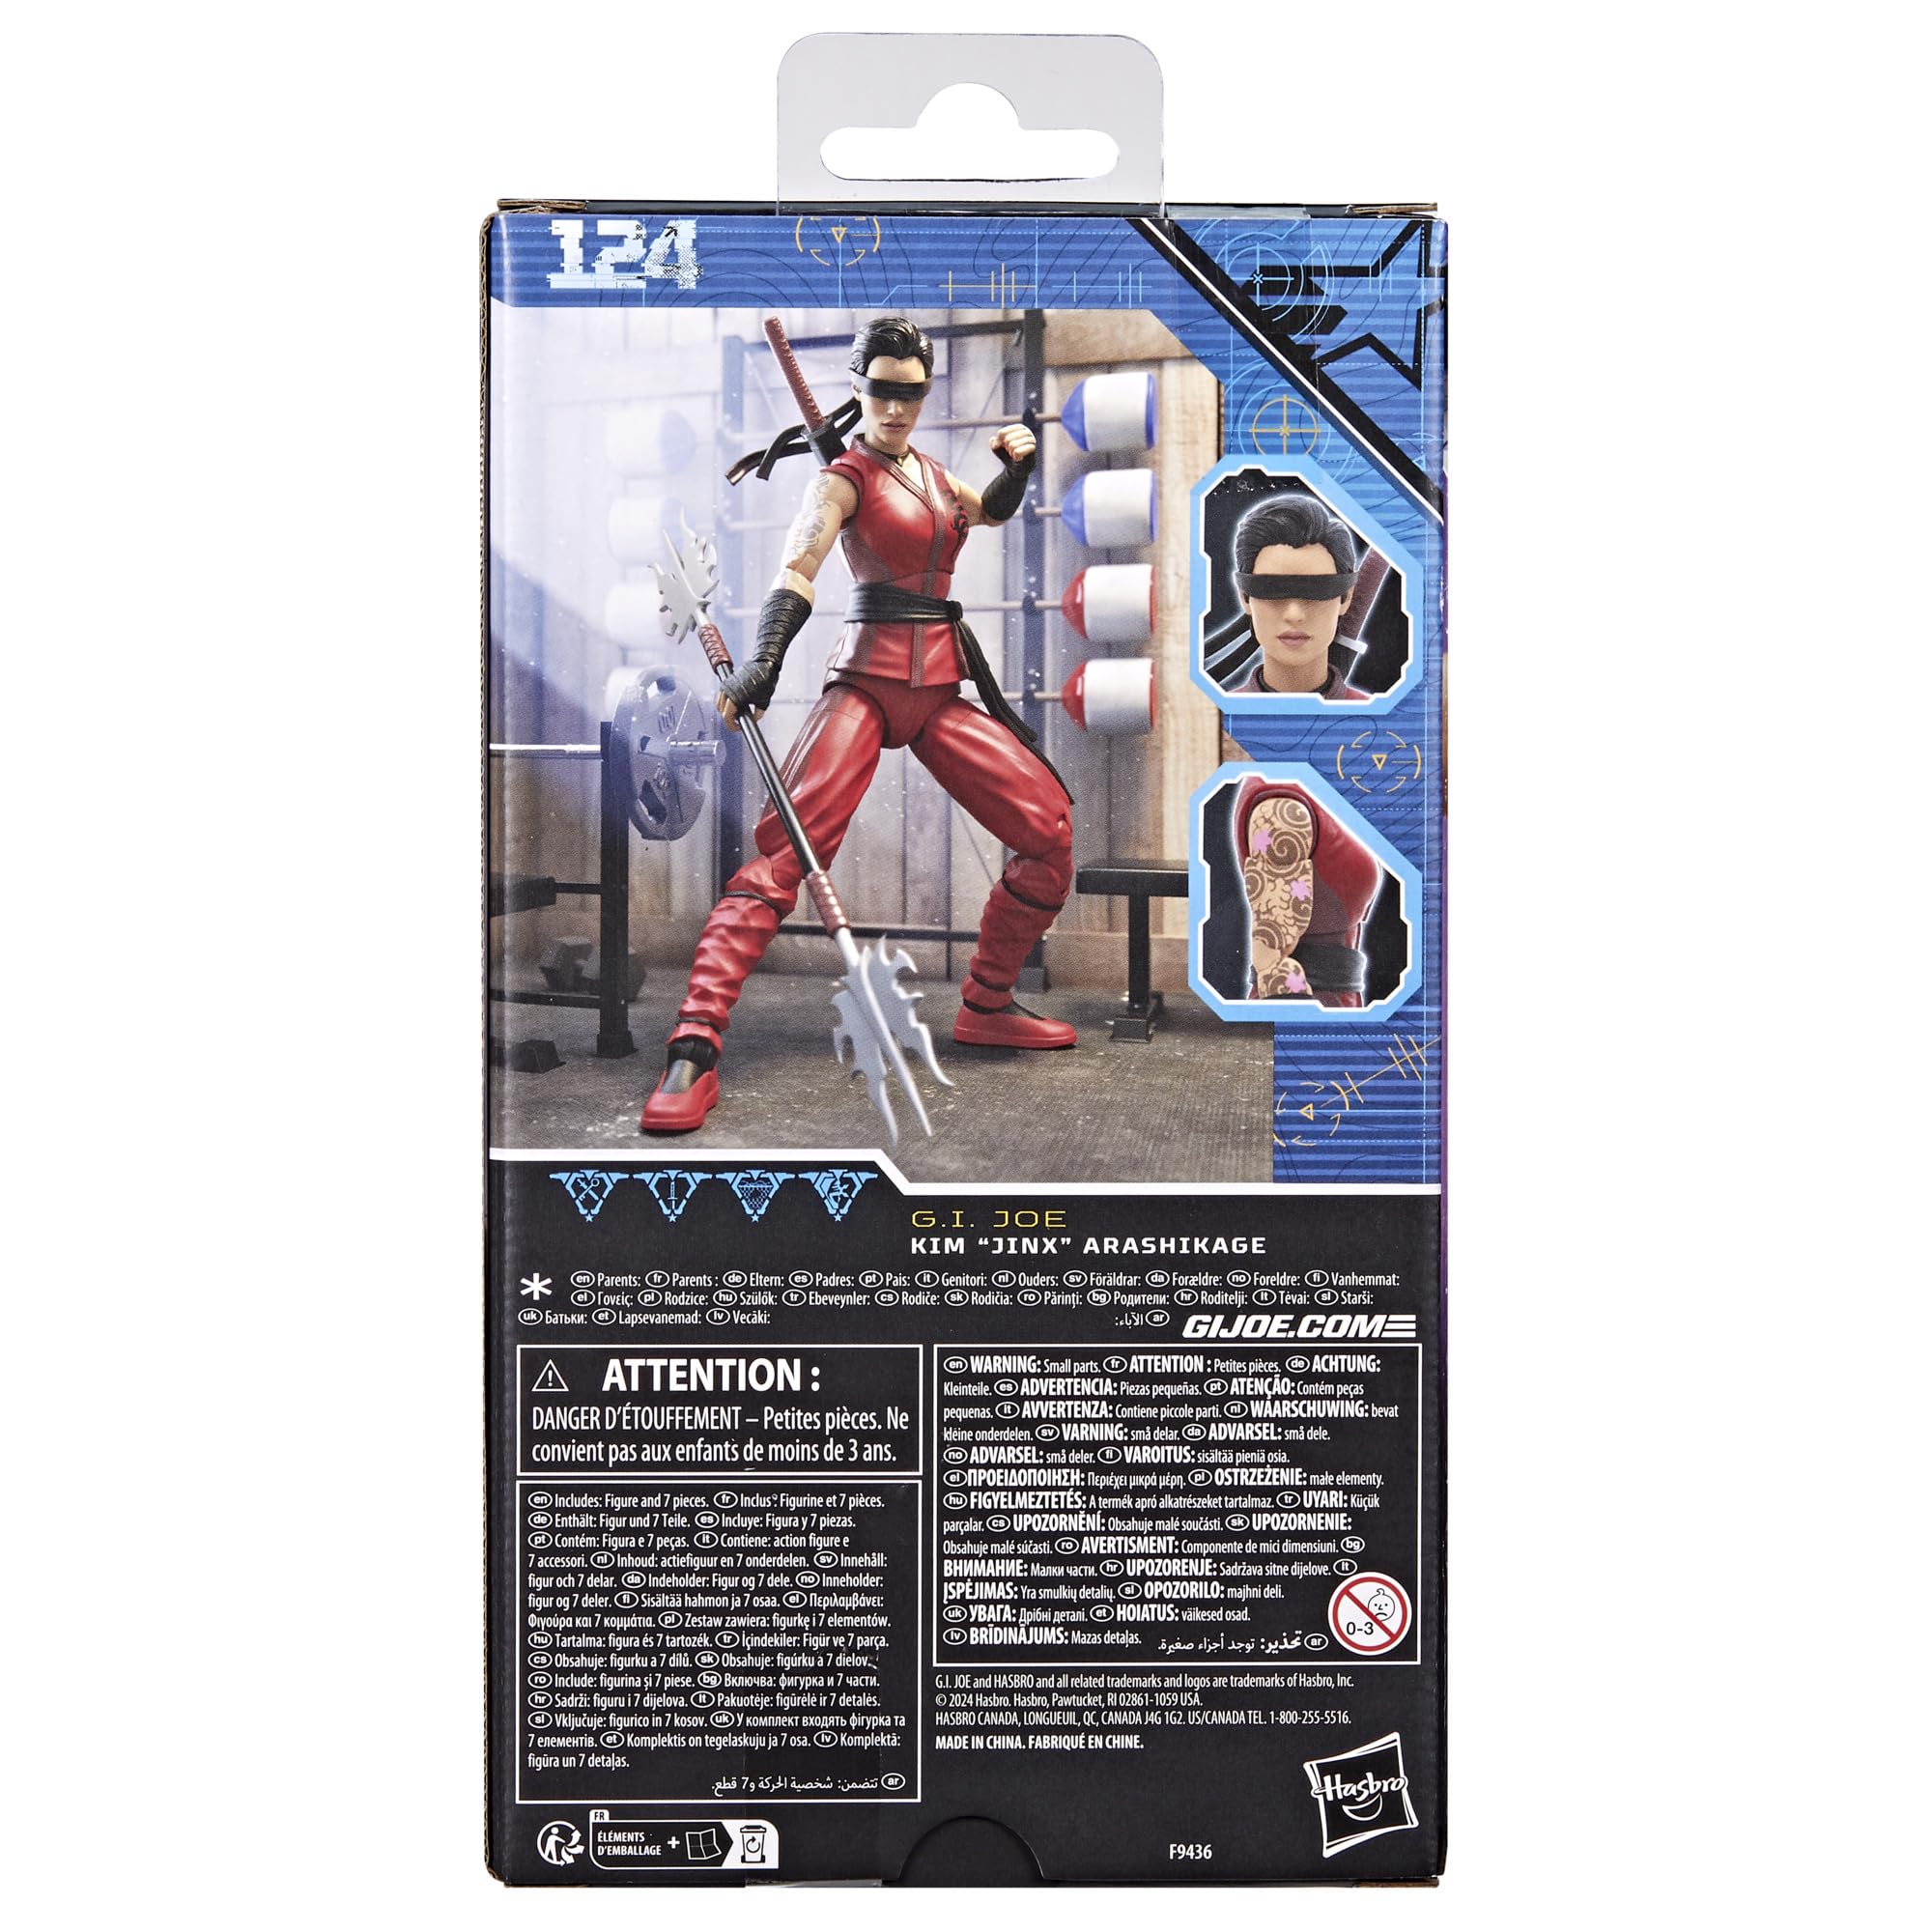 G.I. Joe Classified Series #124, Kim Jinx Arashikage, Collectible 6-Inch Ninja Action Figure with 7 Accessories